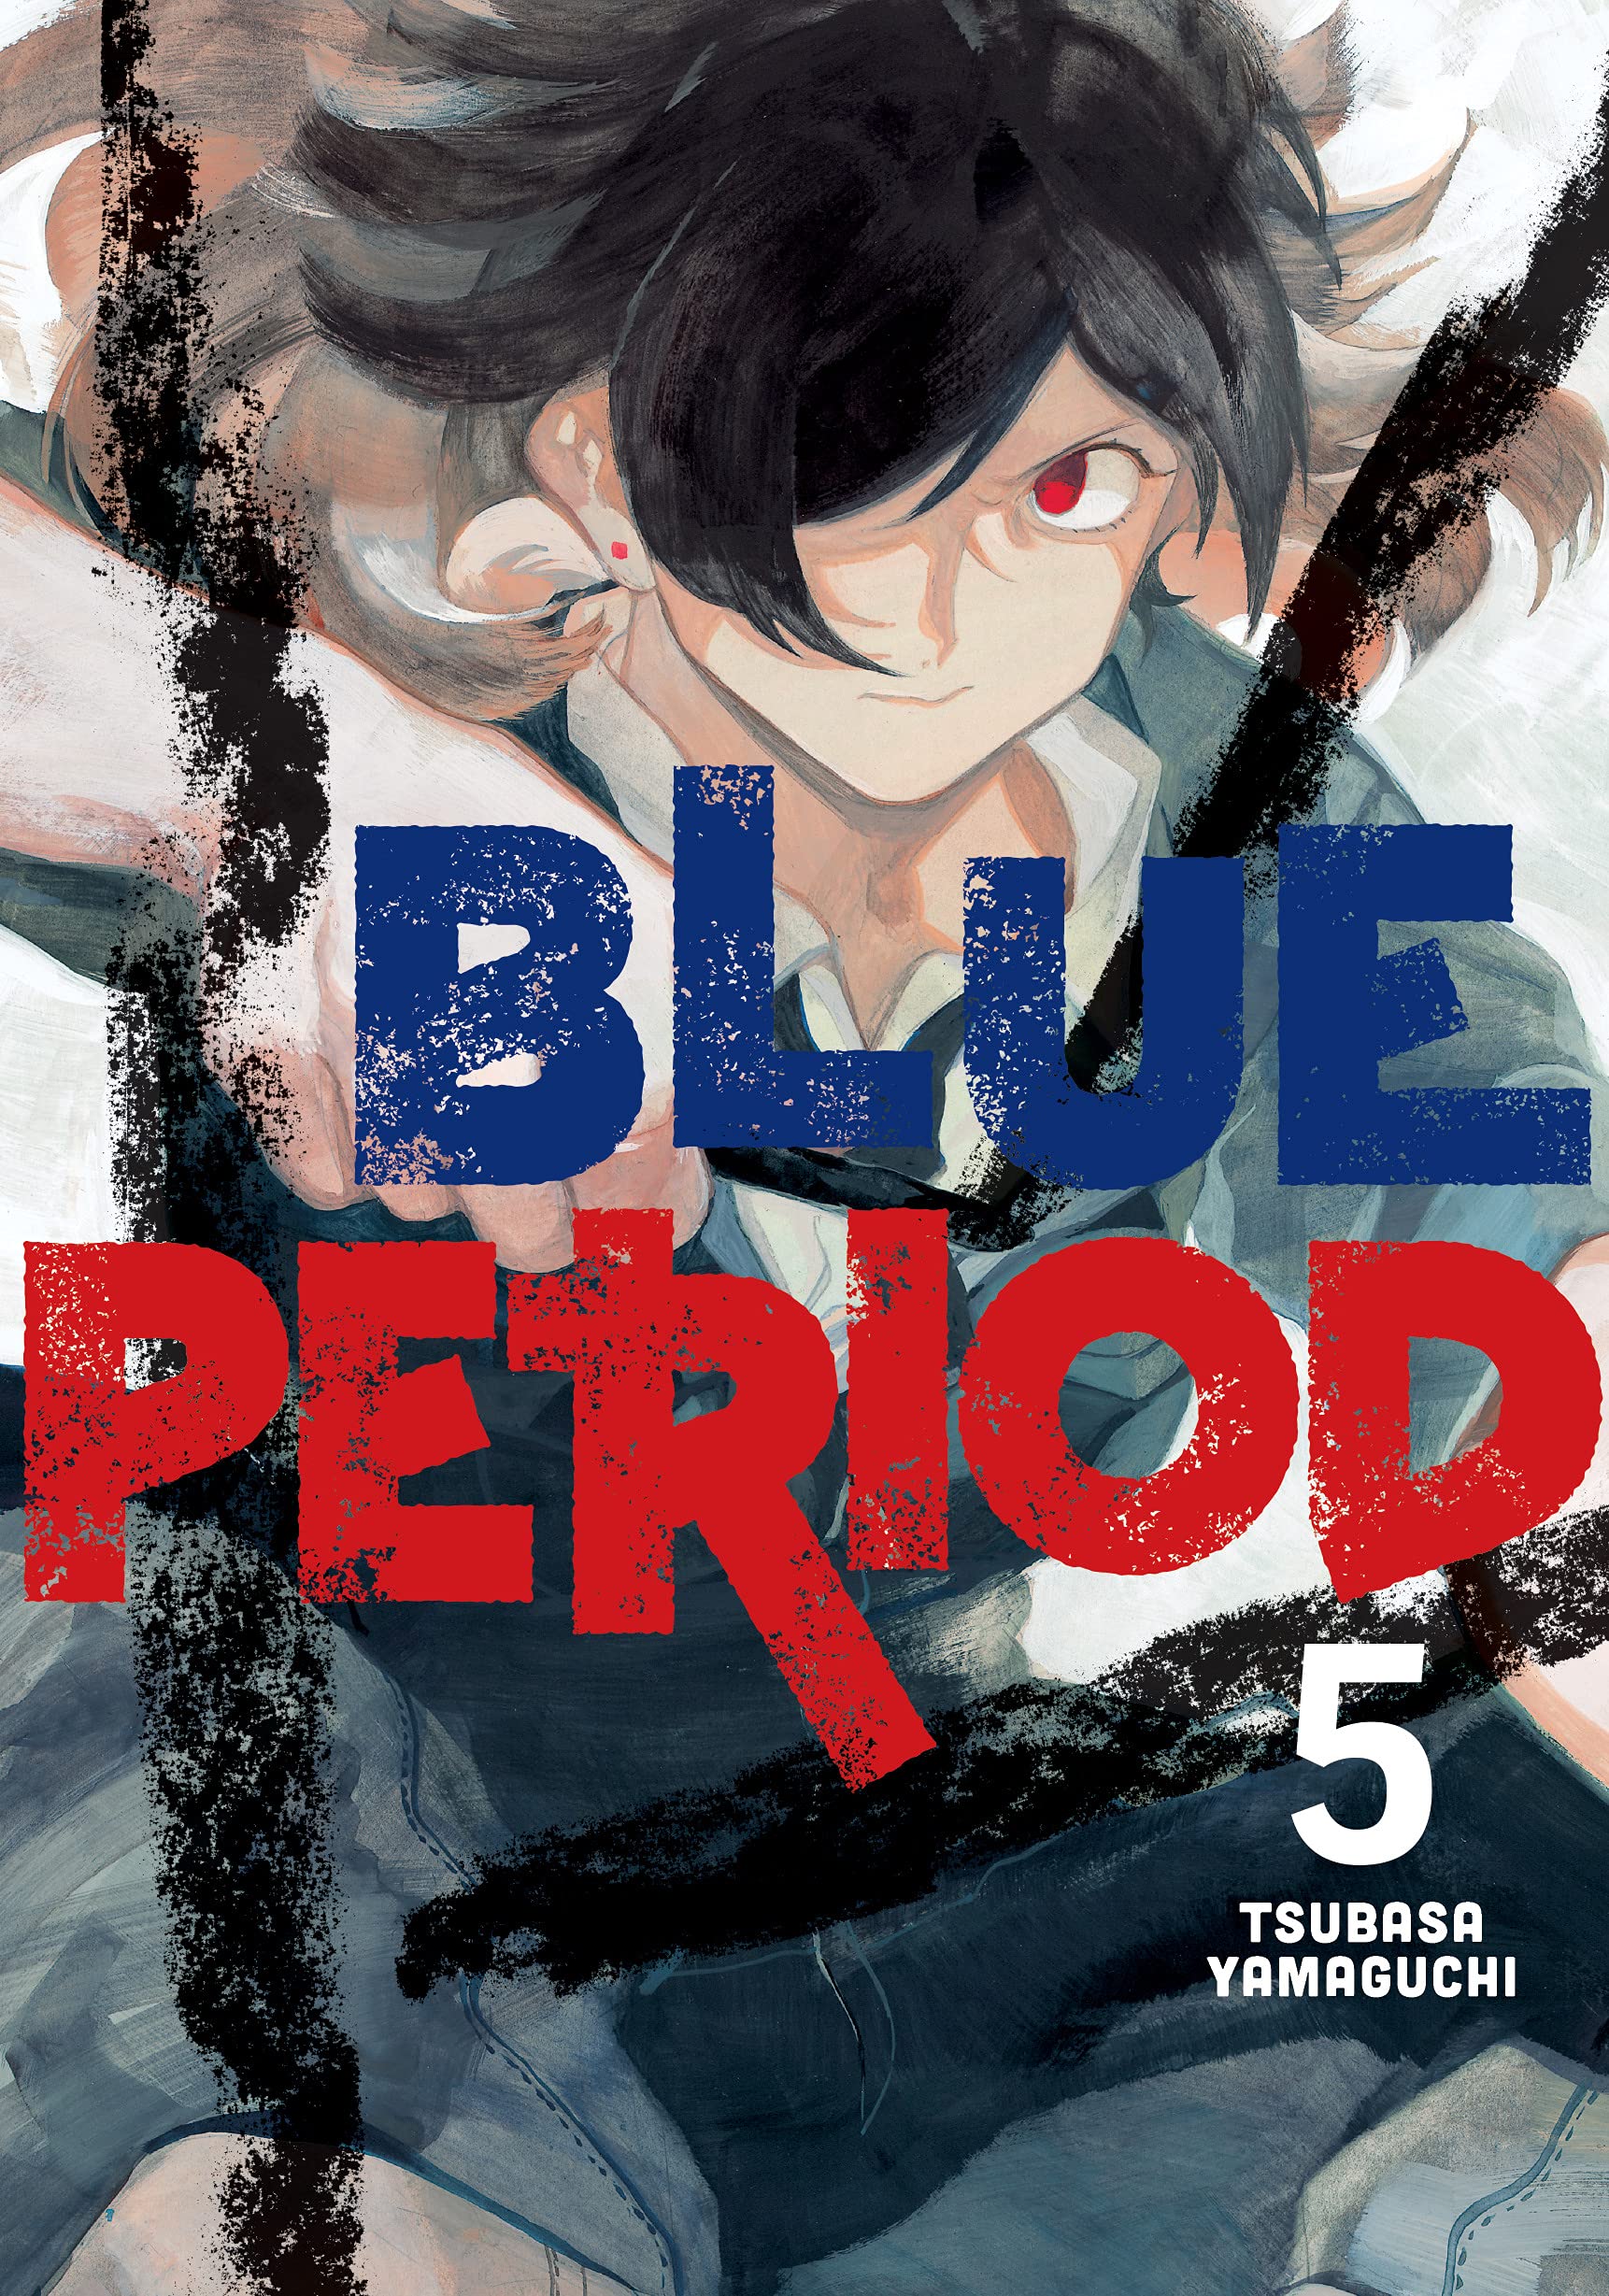 Blue Period Manga Volume 5